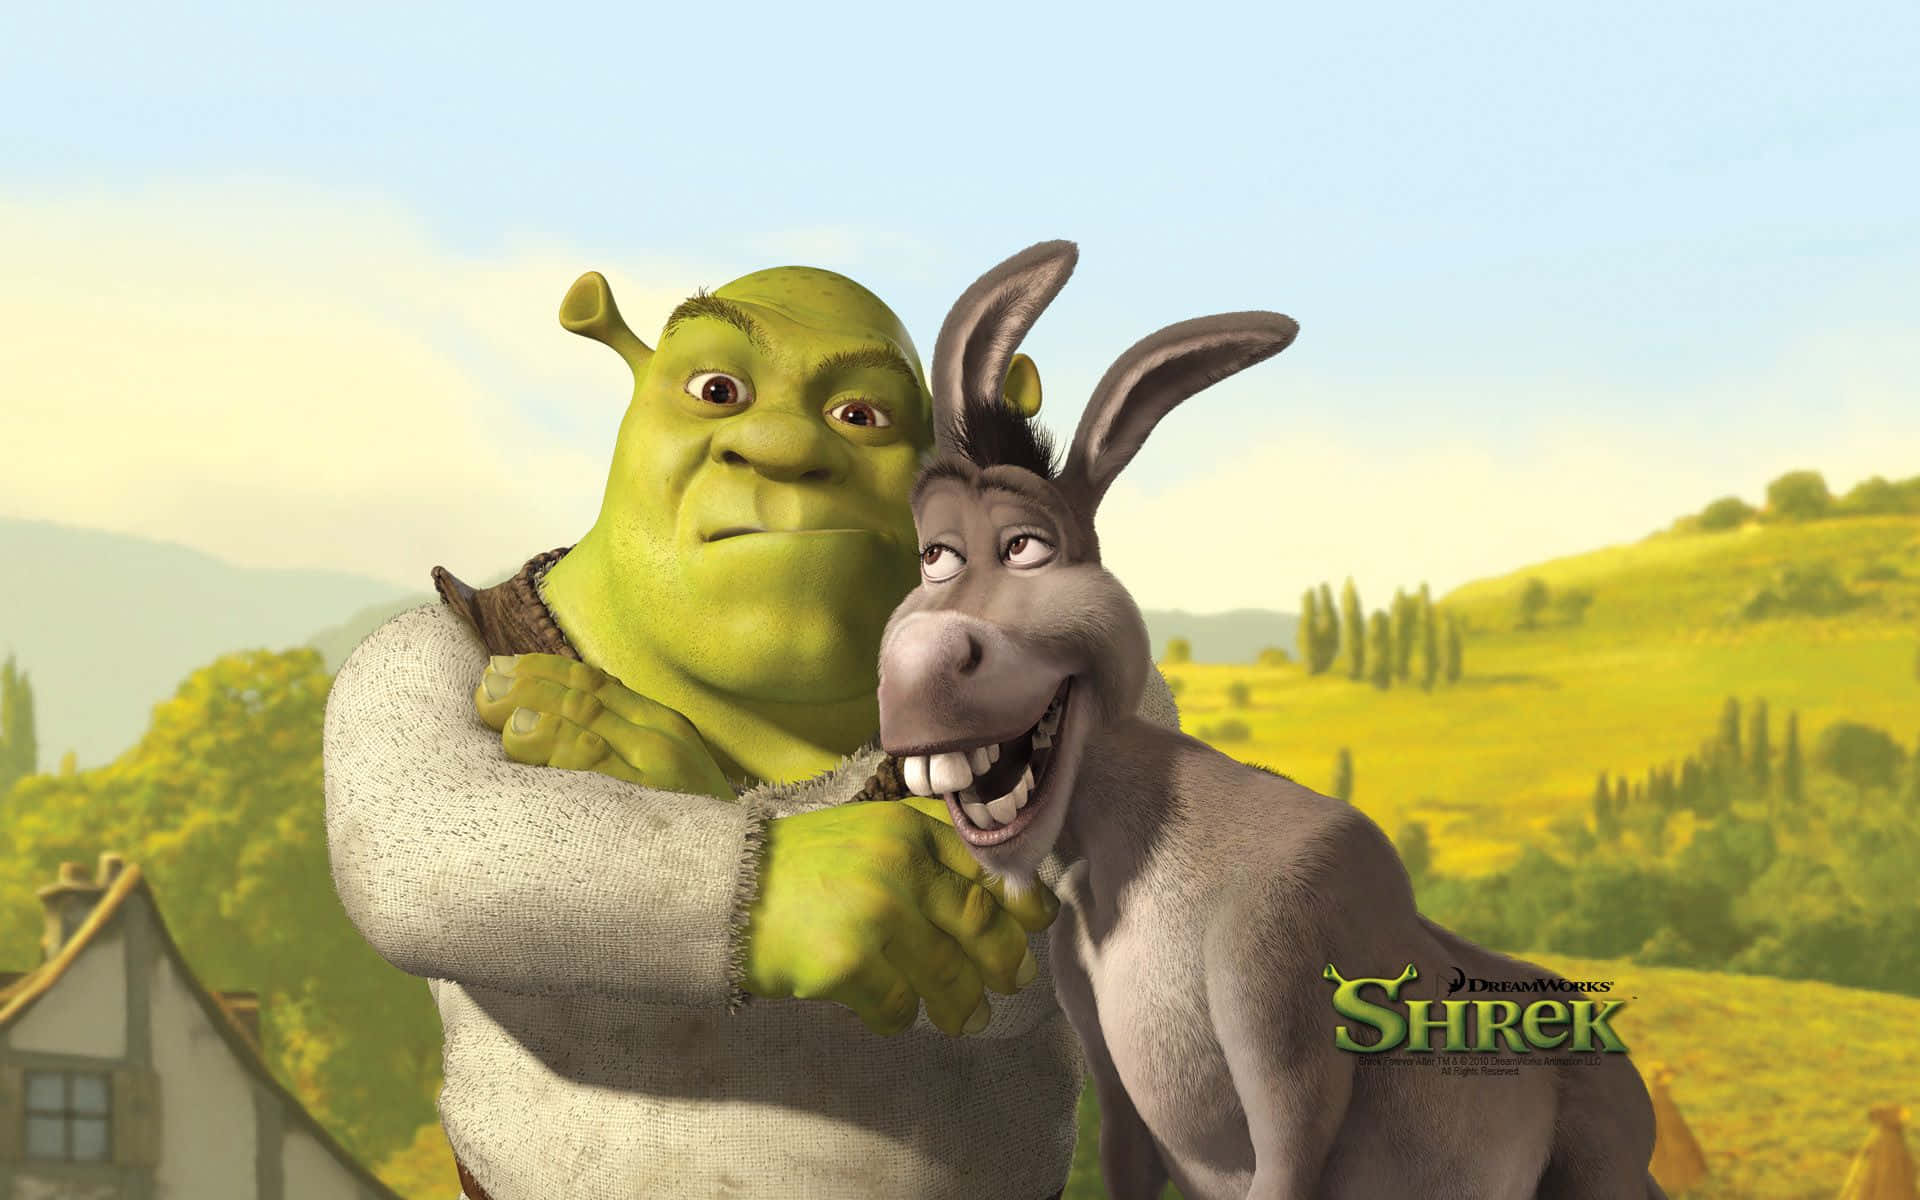 "There's no one- ogre like Shrek!"